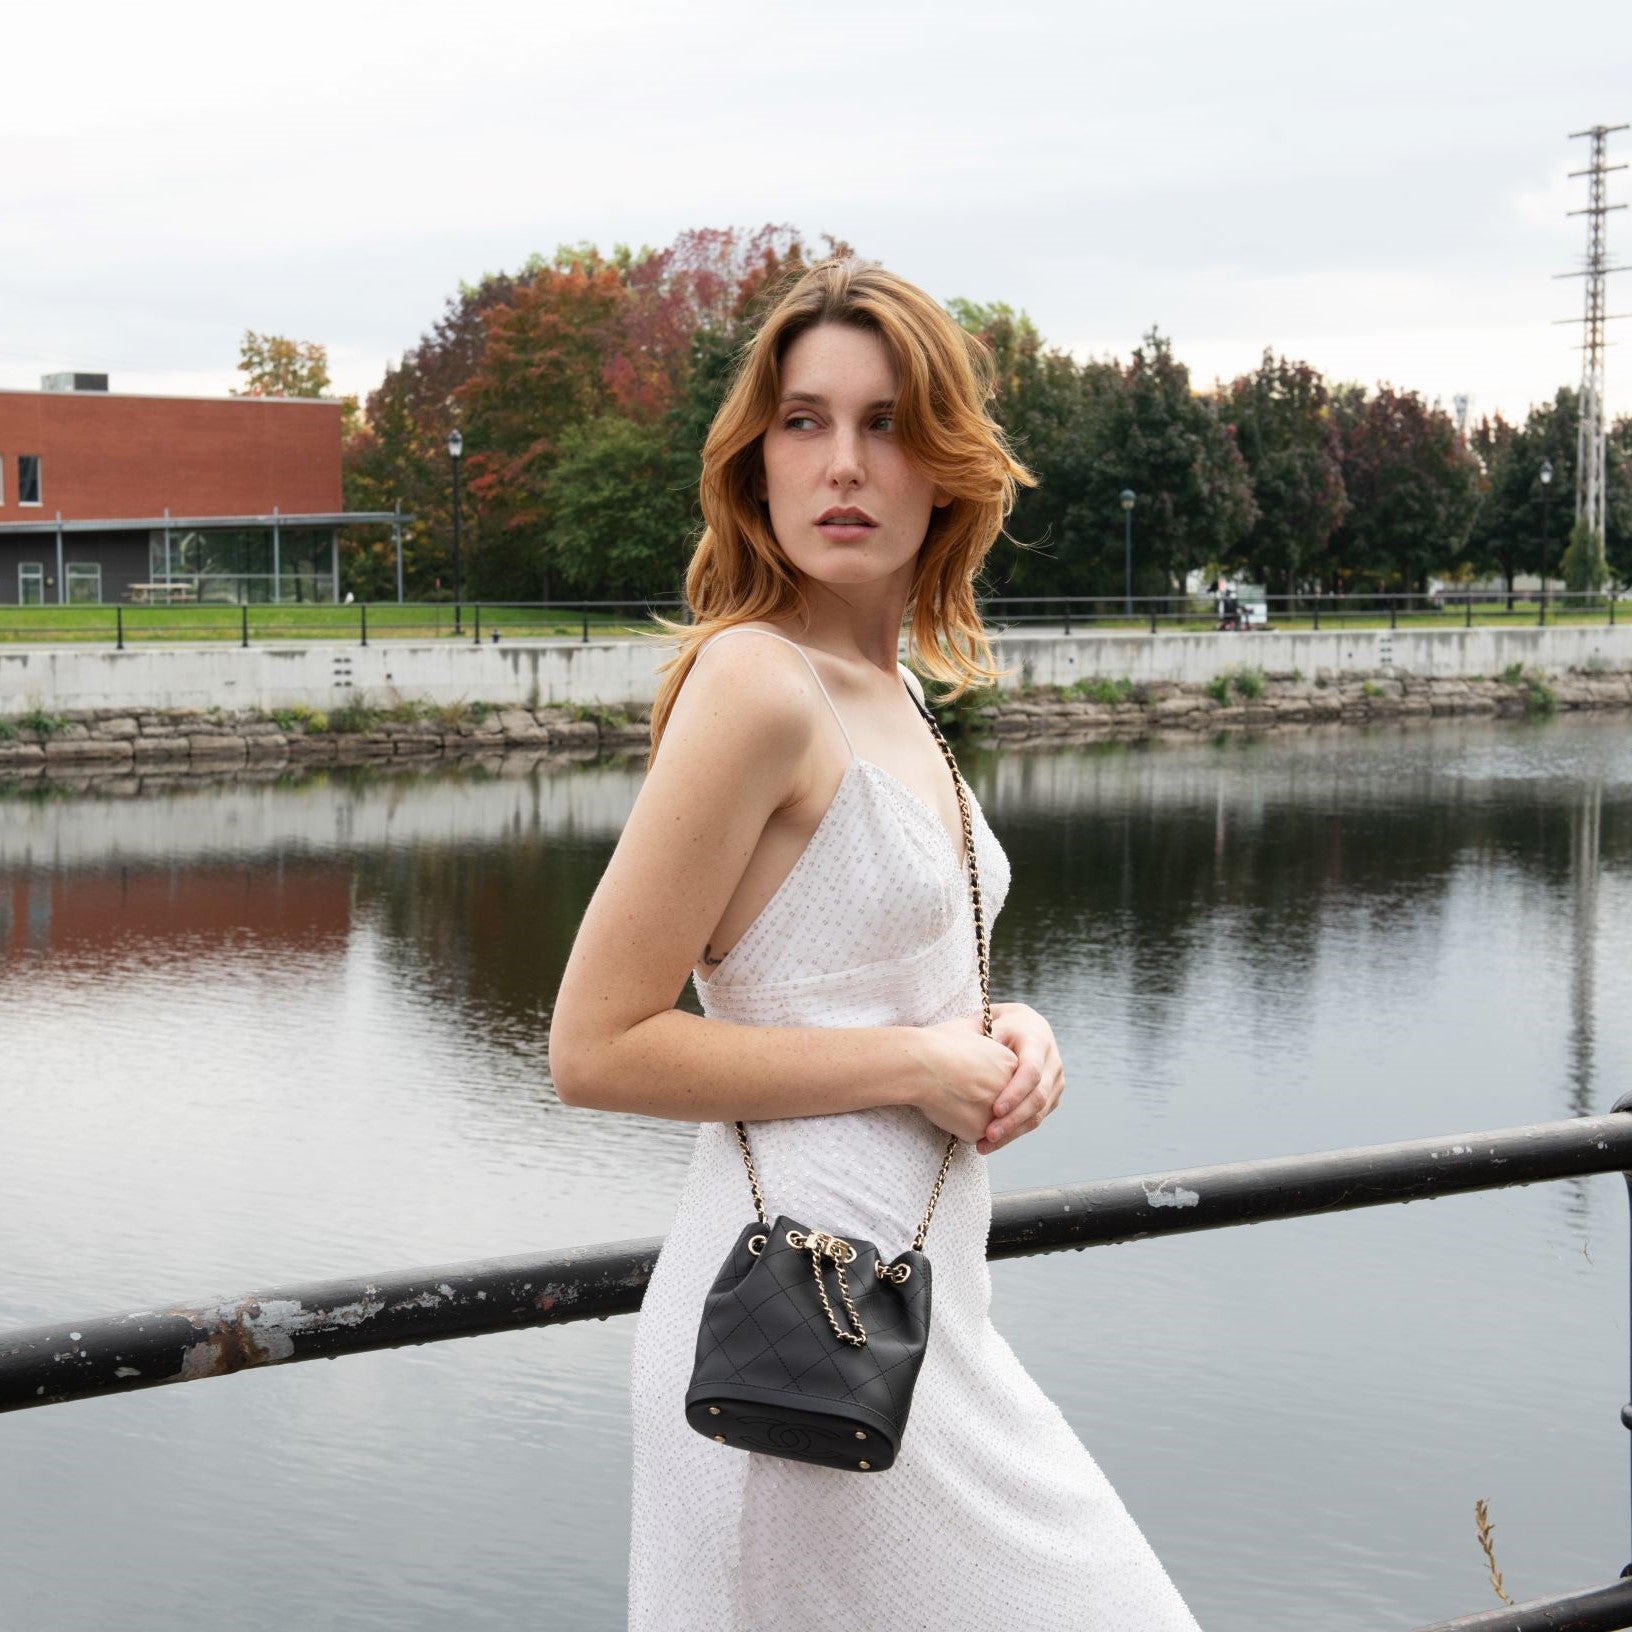 Chanel Black Stitched Calfskin Mini Drawstring Bag GHW – Love that Bag etc  - Preowned Designer Fashions